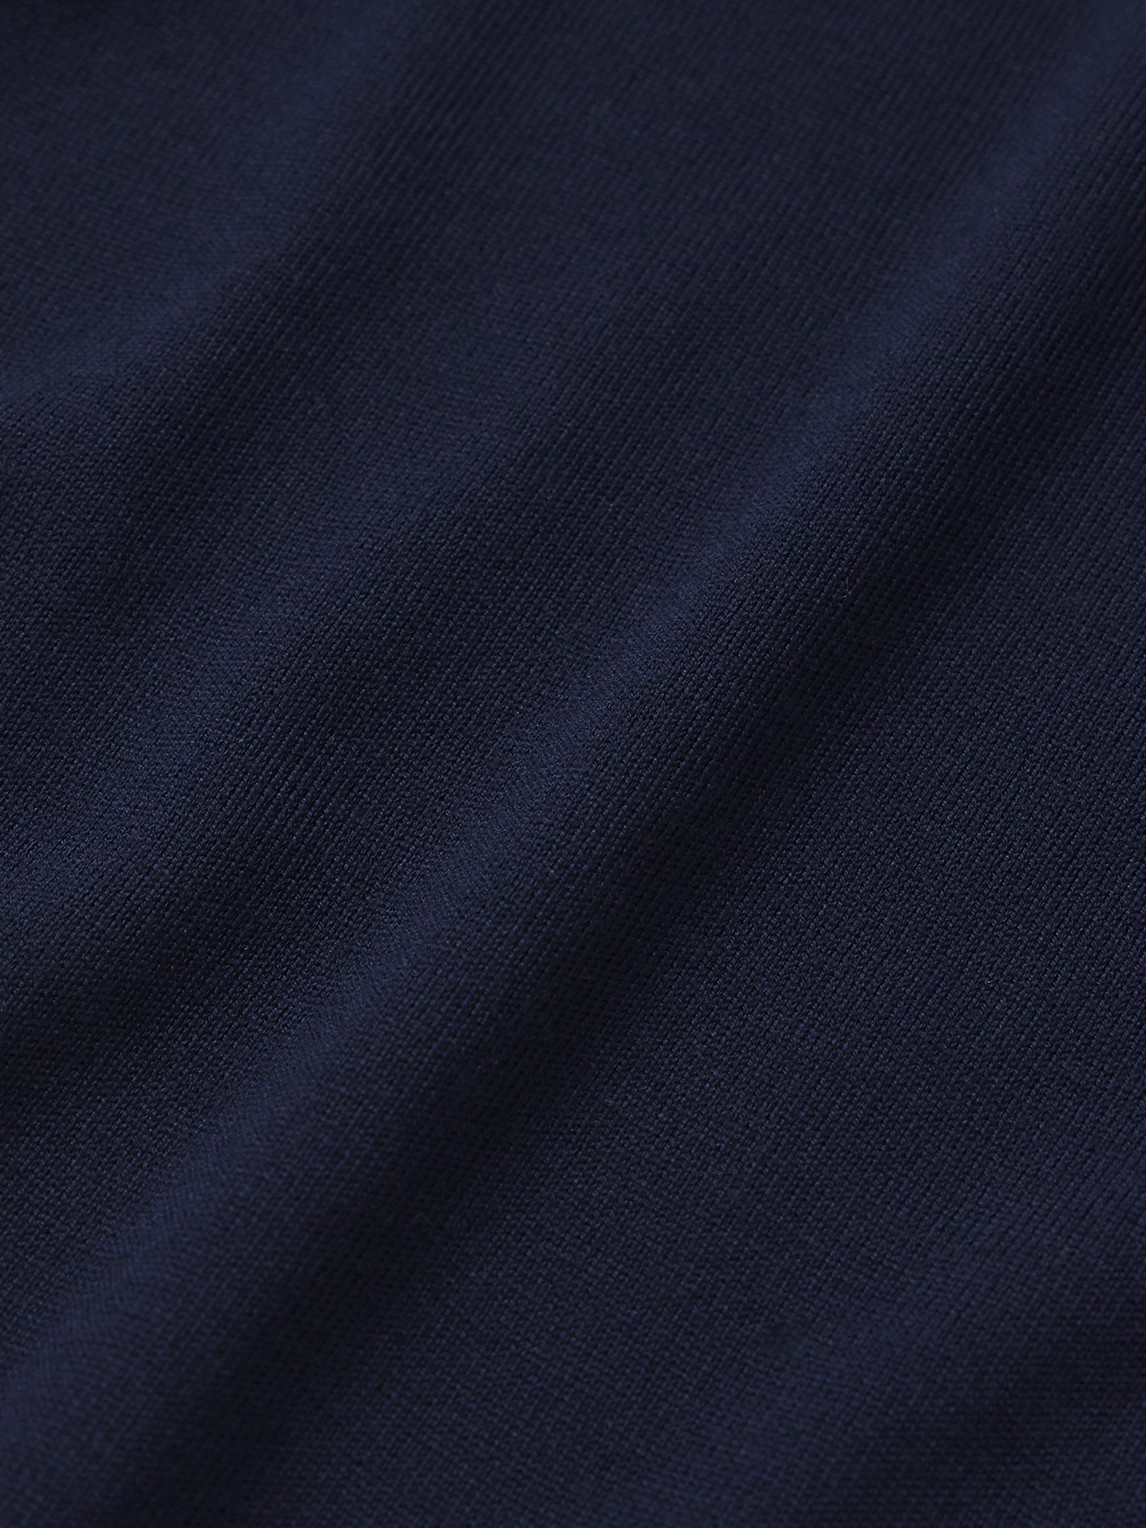 Shop Tom Ford Merino Wool Sweater In Blue